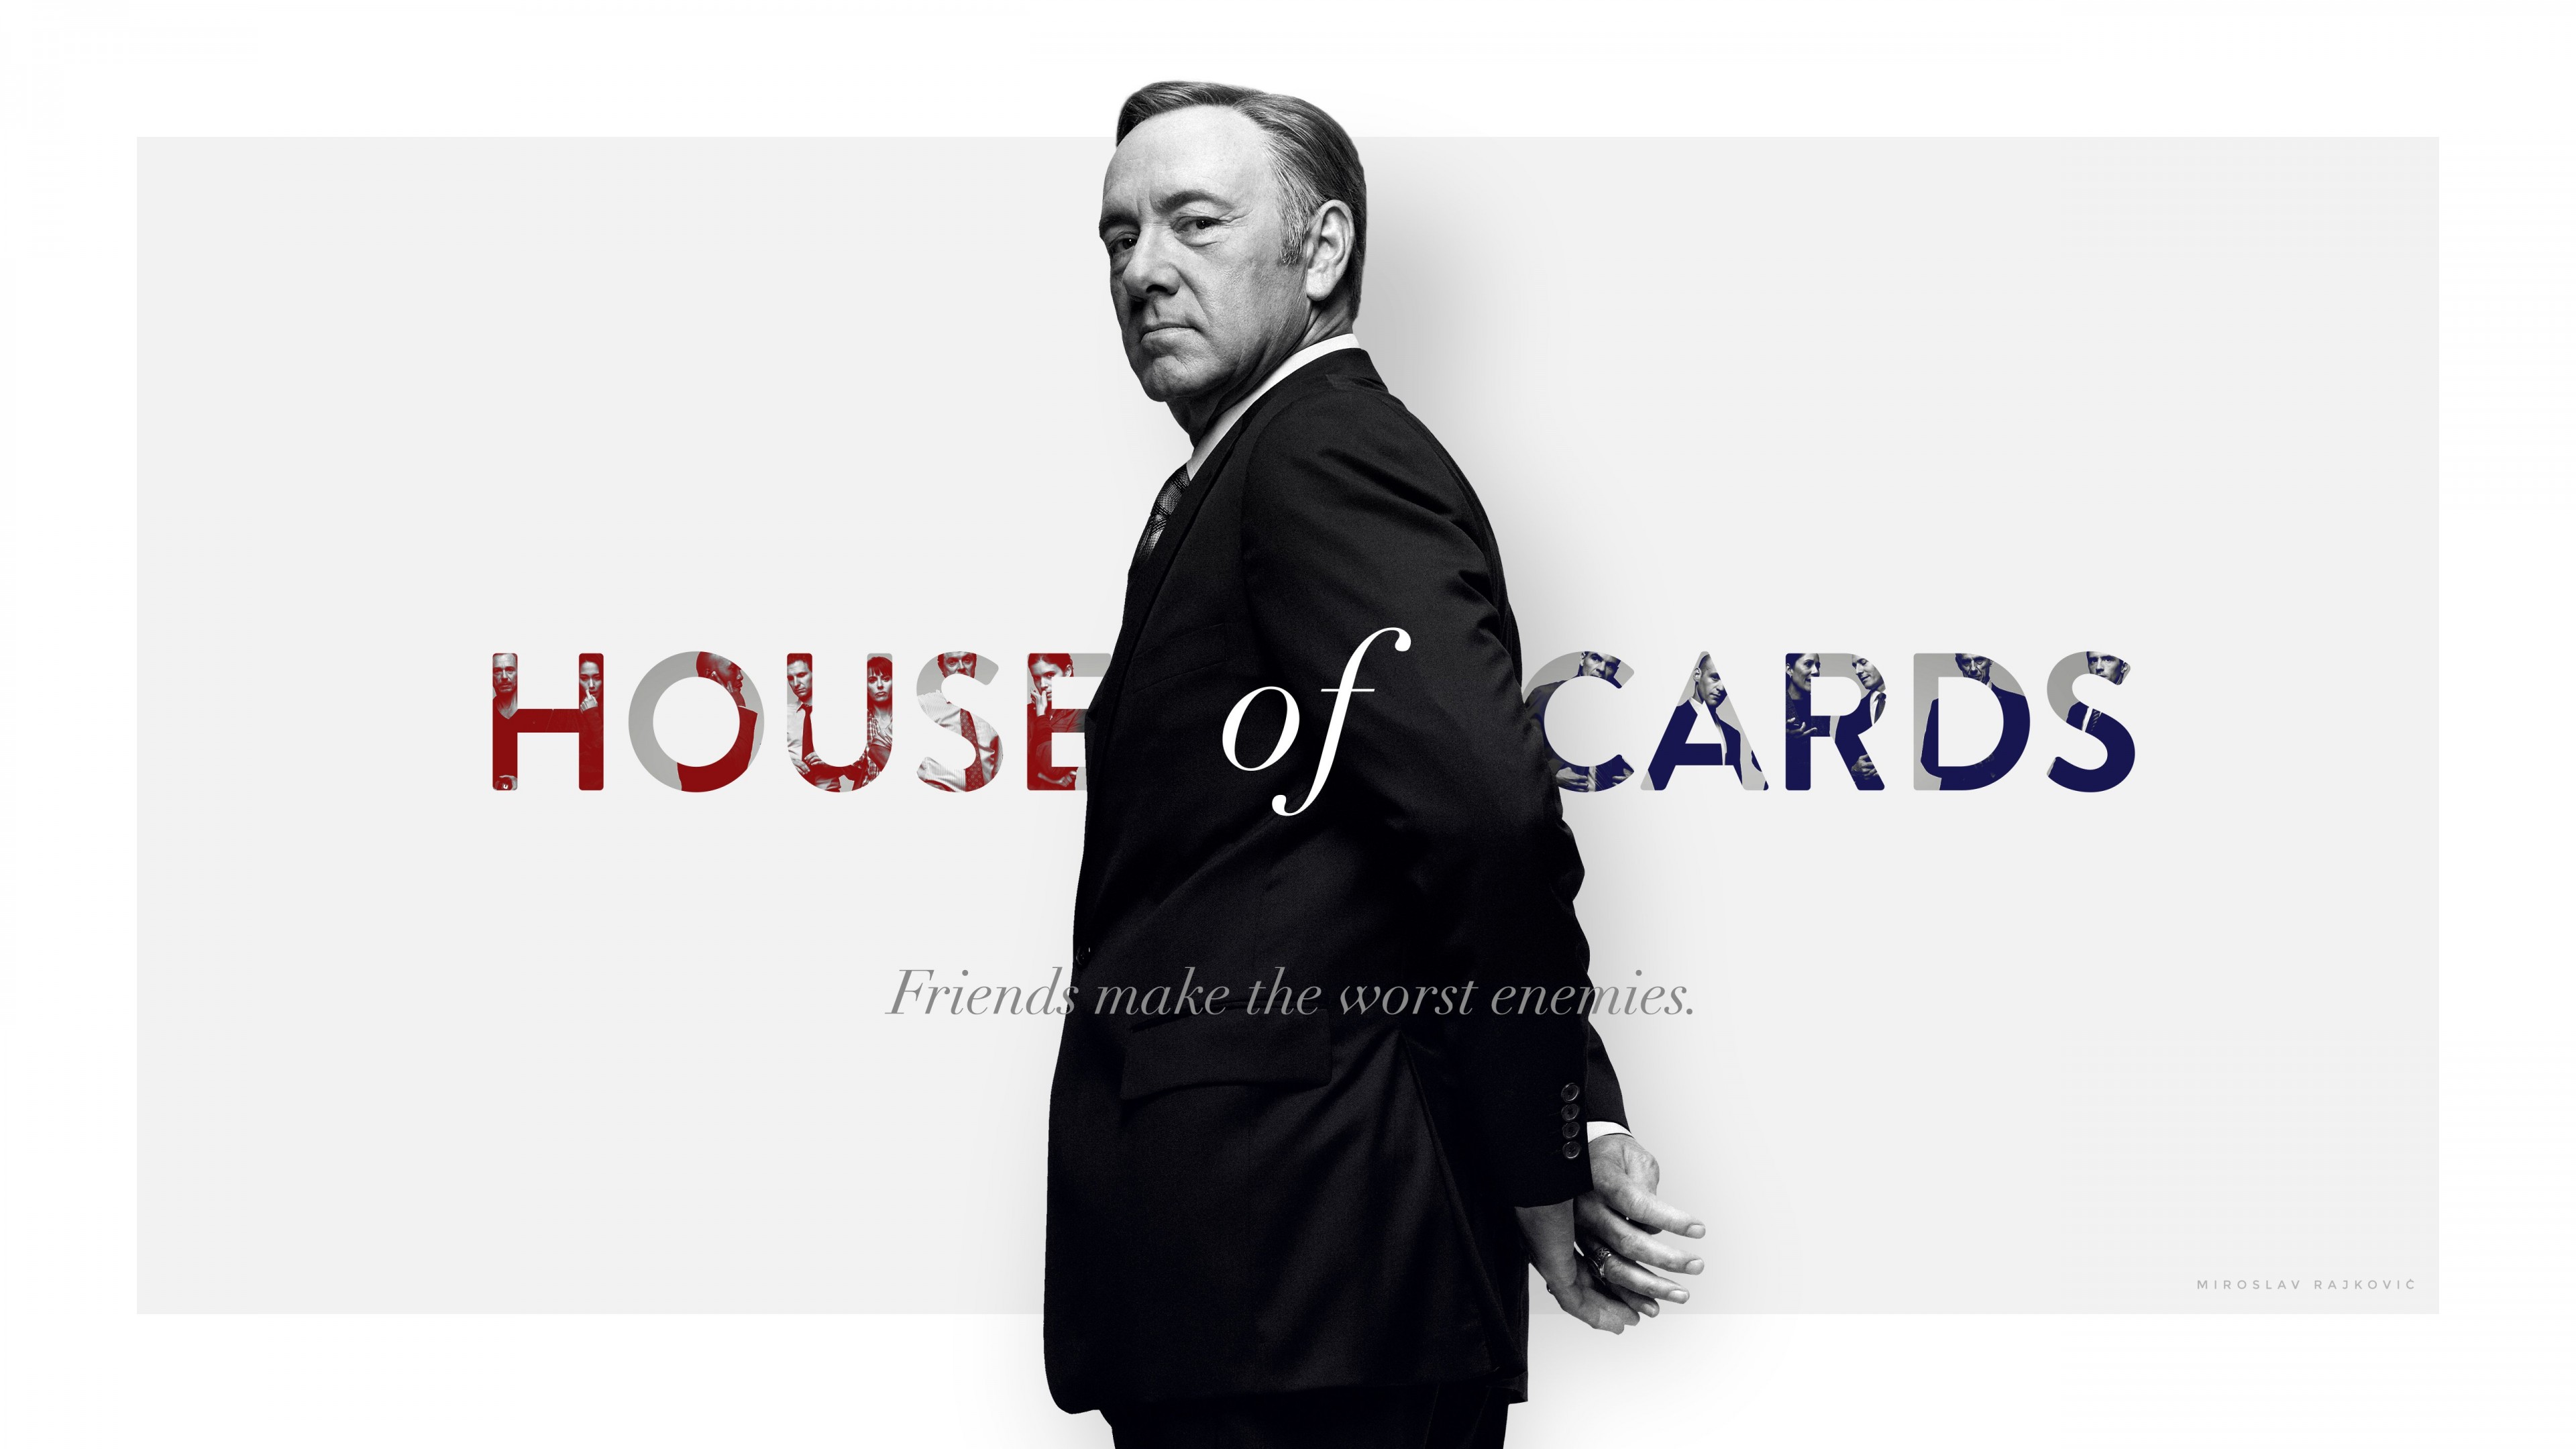 Frank Underwood - House of Cards Wallpaper for Desktop 4K 3840x2160